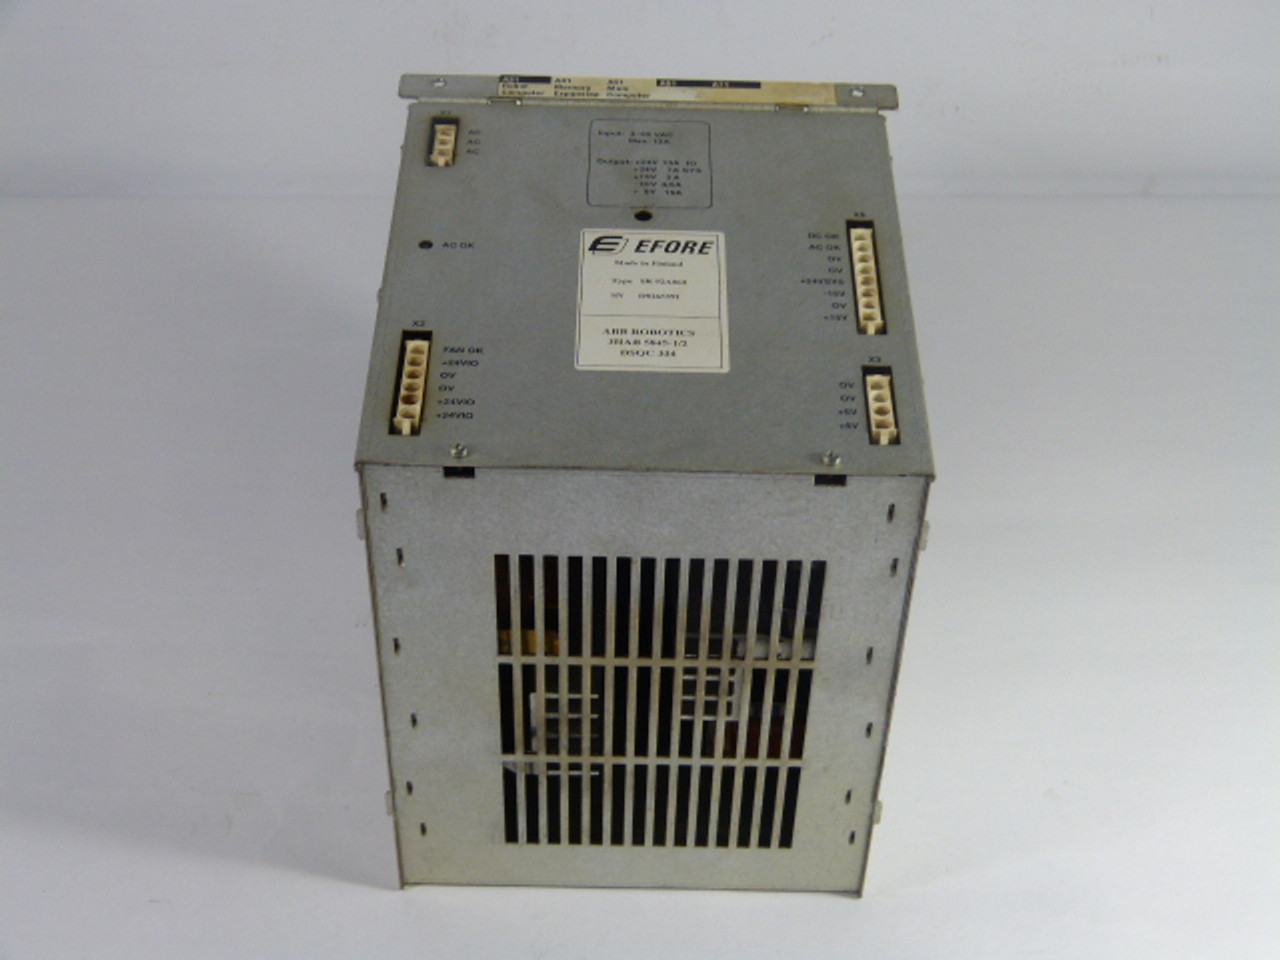 ABB SR92A060 3HAB5485-1/2 Power Supply Unit 3-55 VAC USED